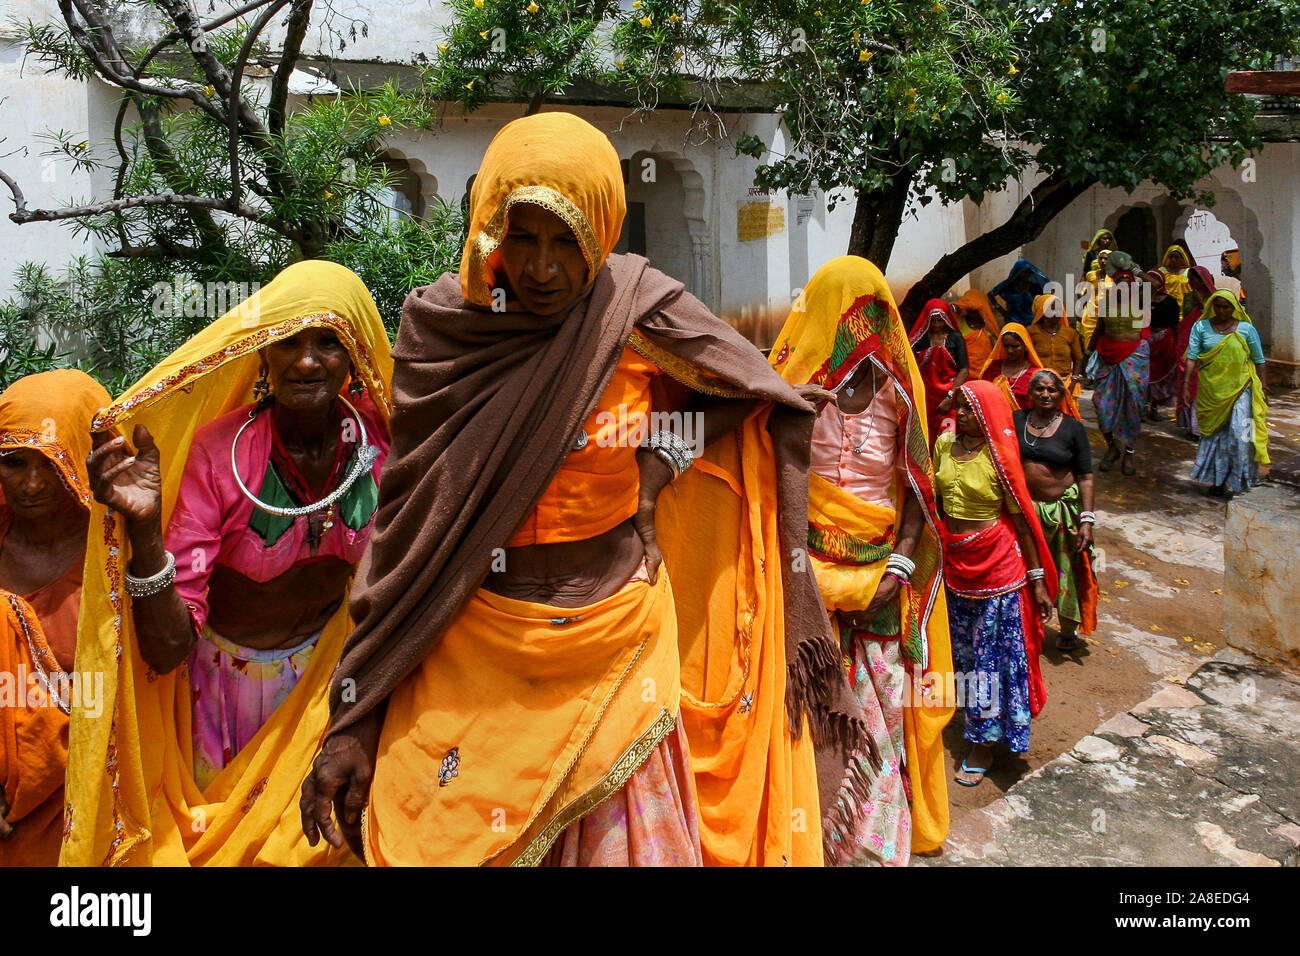 Pushkar, Rajasthan, India: Group of Indian women crossing a courtyard during a pilgrimage to Pushkar Stock Photo